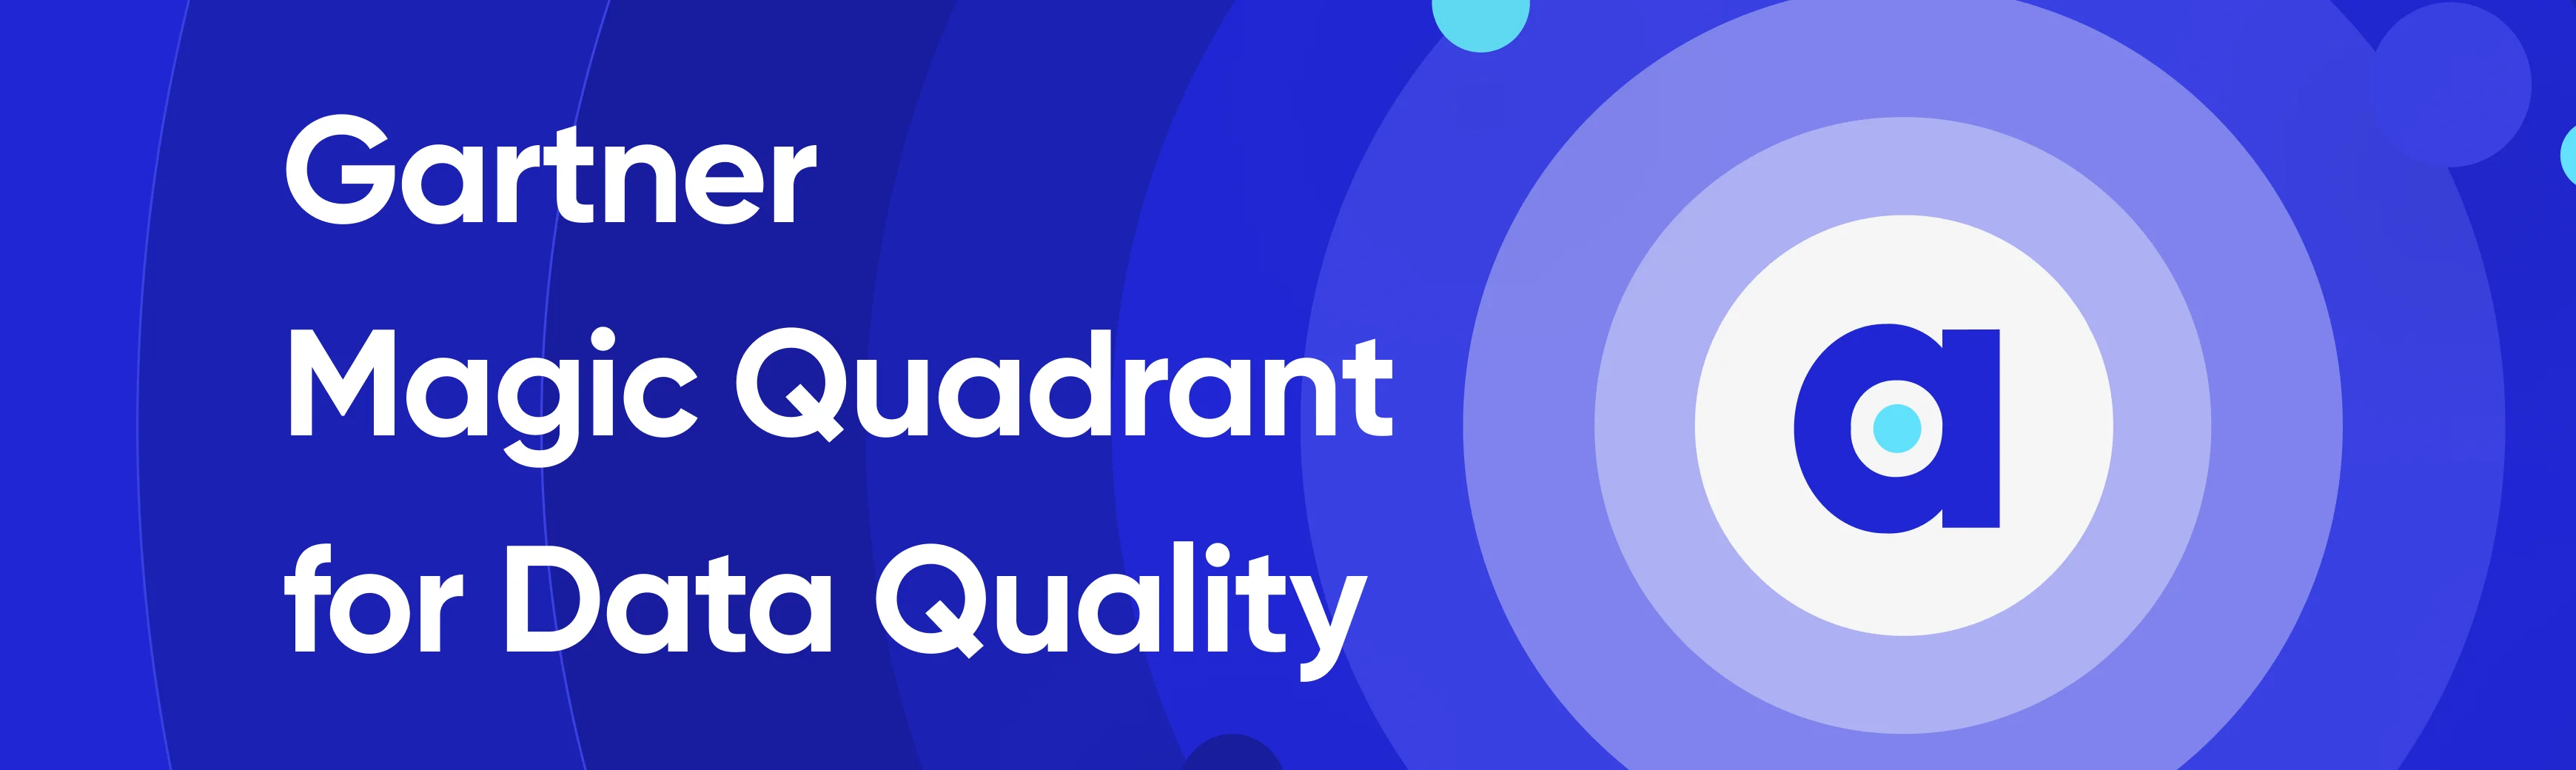 Gartner Magic Quadrant for Data Quality